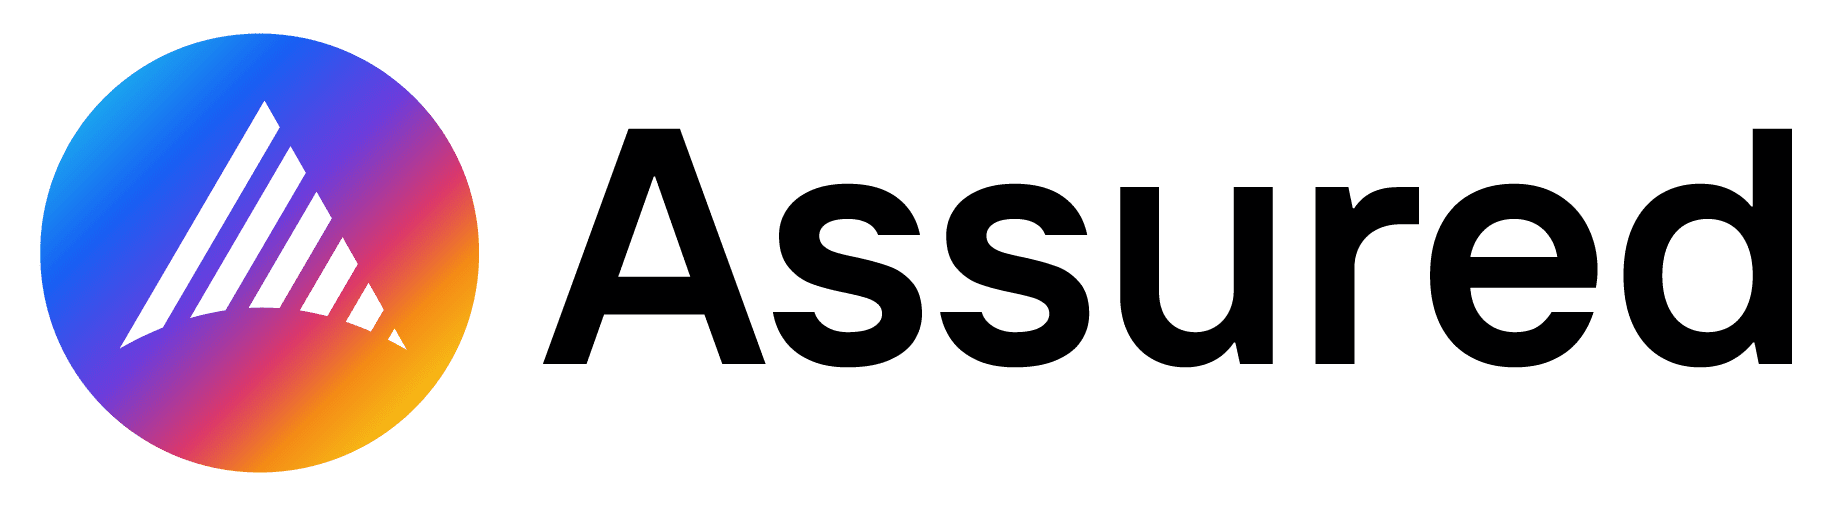 Assured Claims Logo